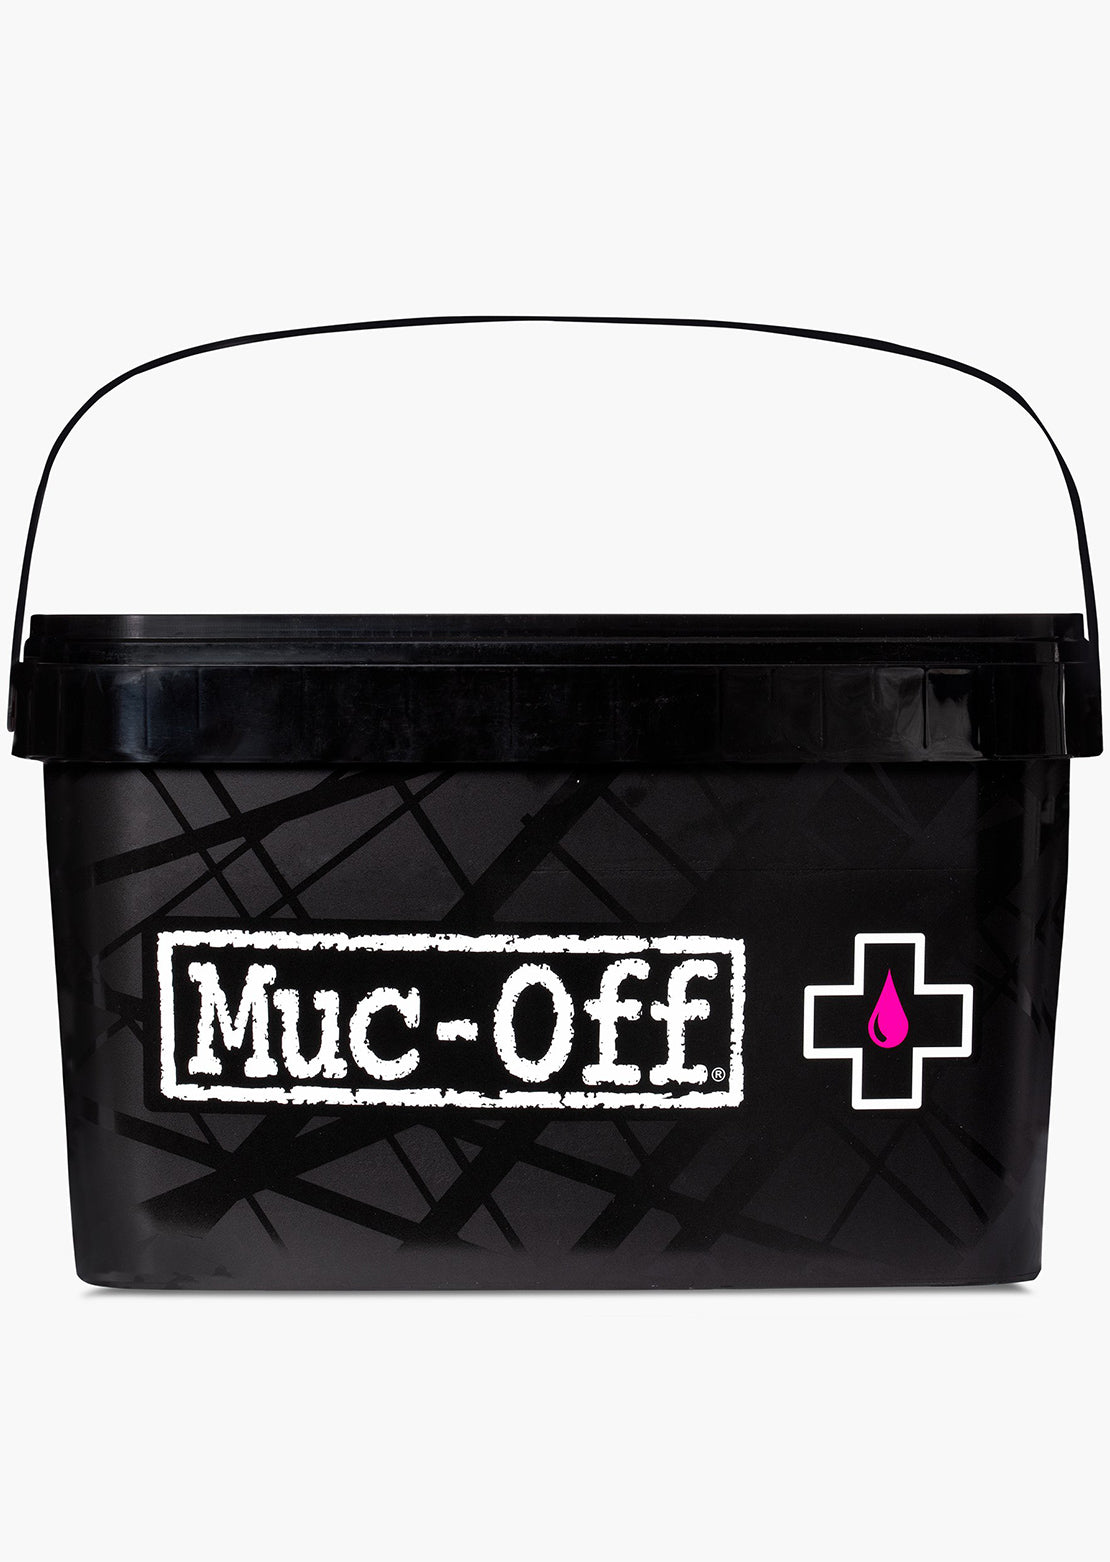 Muc-Off 8-in-1 Bike Cleaning Kit Bucket